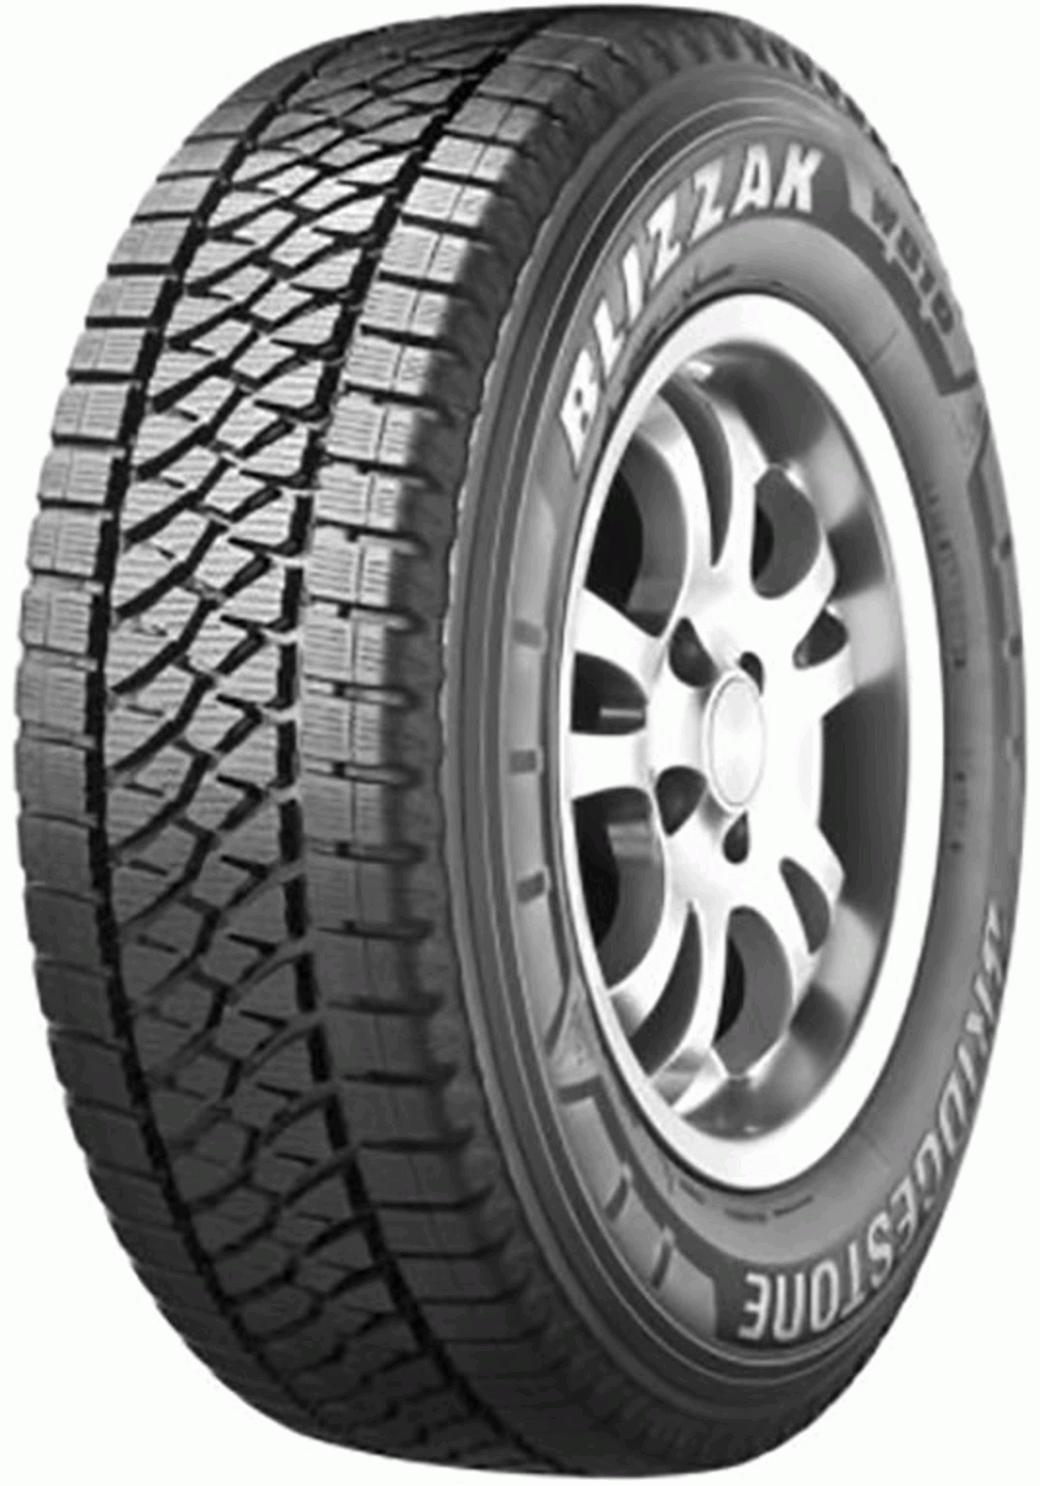 Bridgestone W810 Tire - and Tests Reviews Blizzak